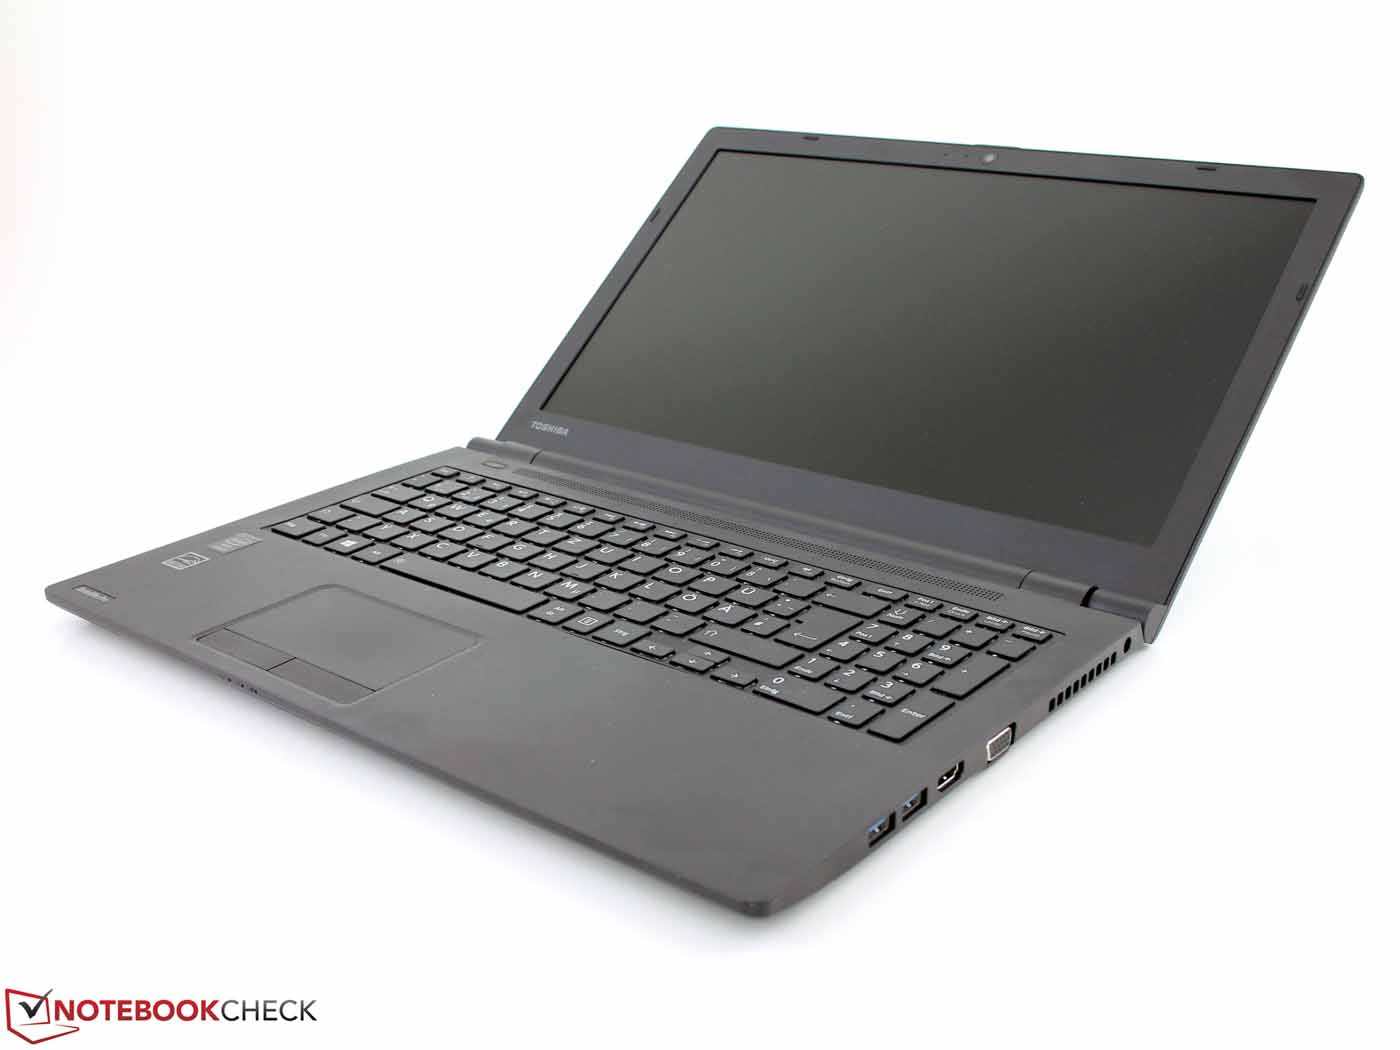 Toshiba Satellite Pro R50 Series - Notebookcheck.net External Reviews